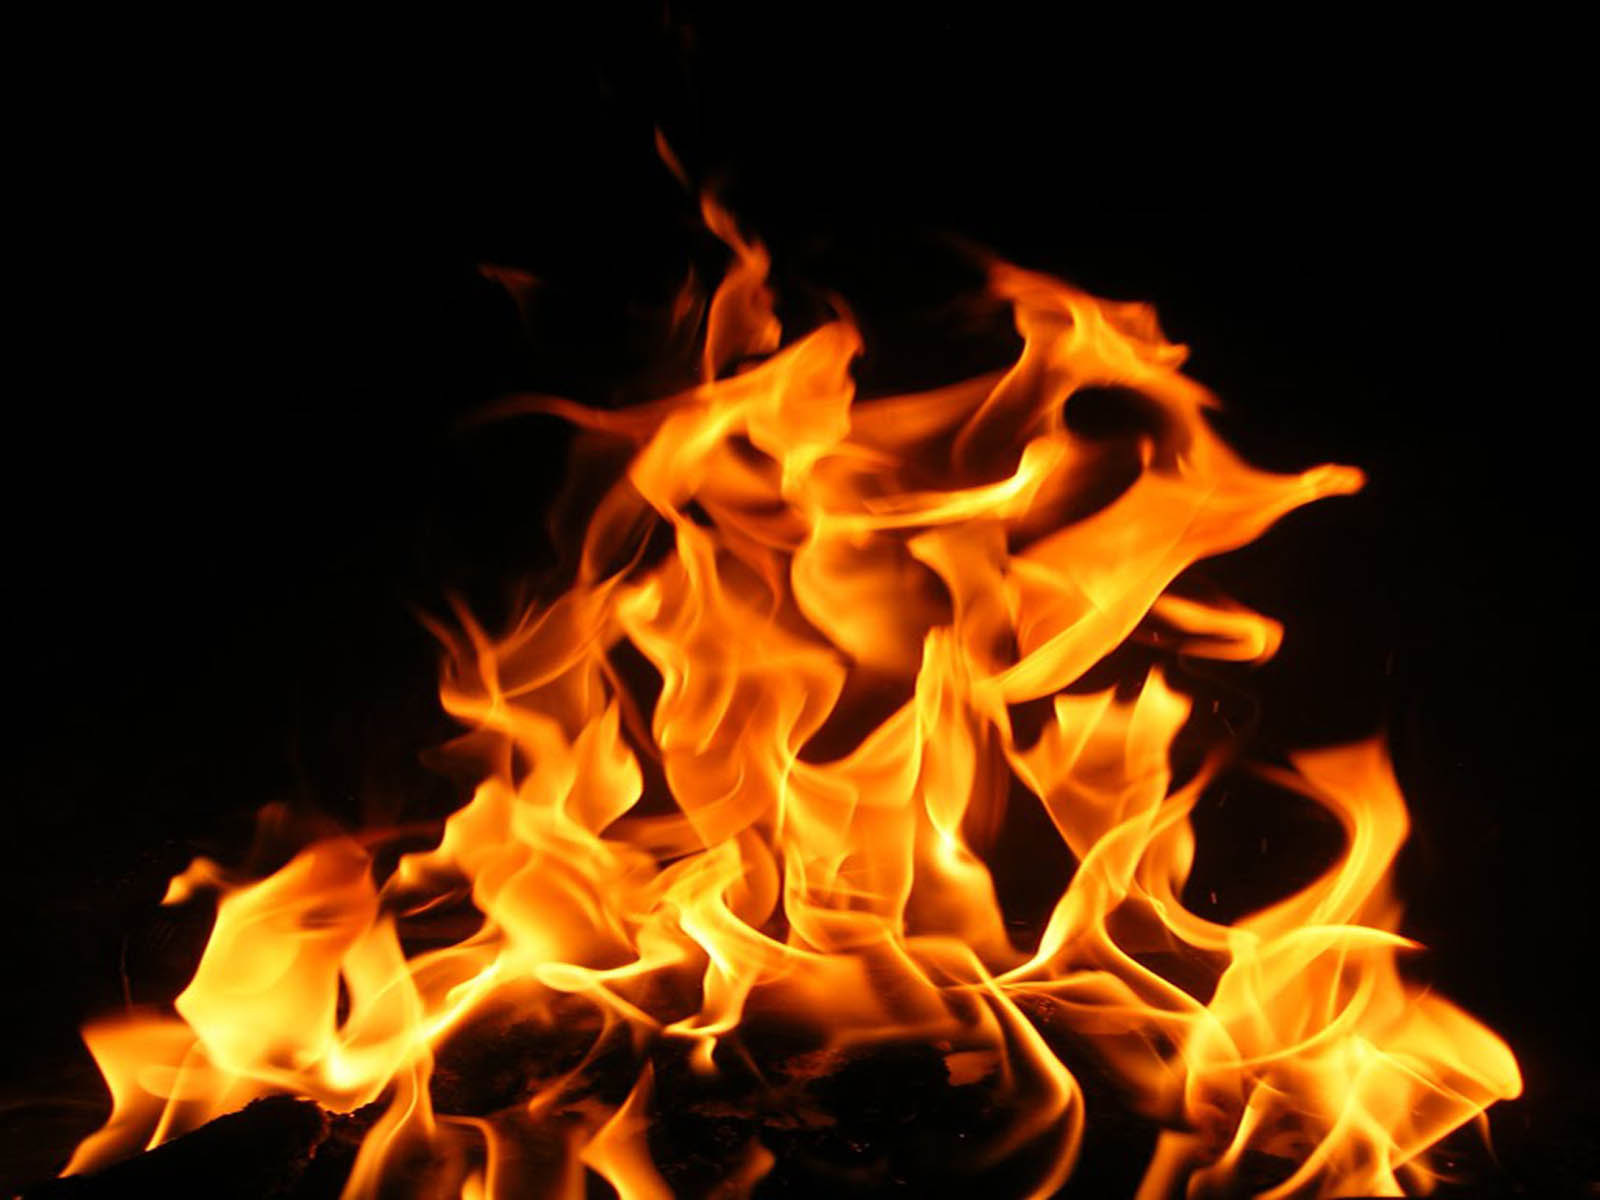 http://3.bp.blogspot.com/-uajo8J550R0/T8zheqdXlkI/AAAAAAAADpY/vEtb35qAfm0/s1600/Fire+Flames+9.jpg